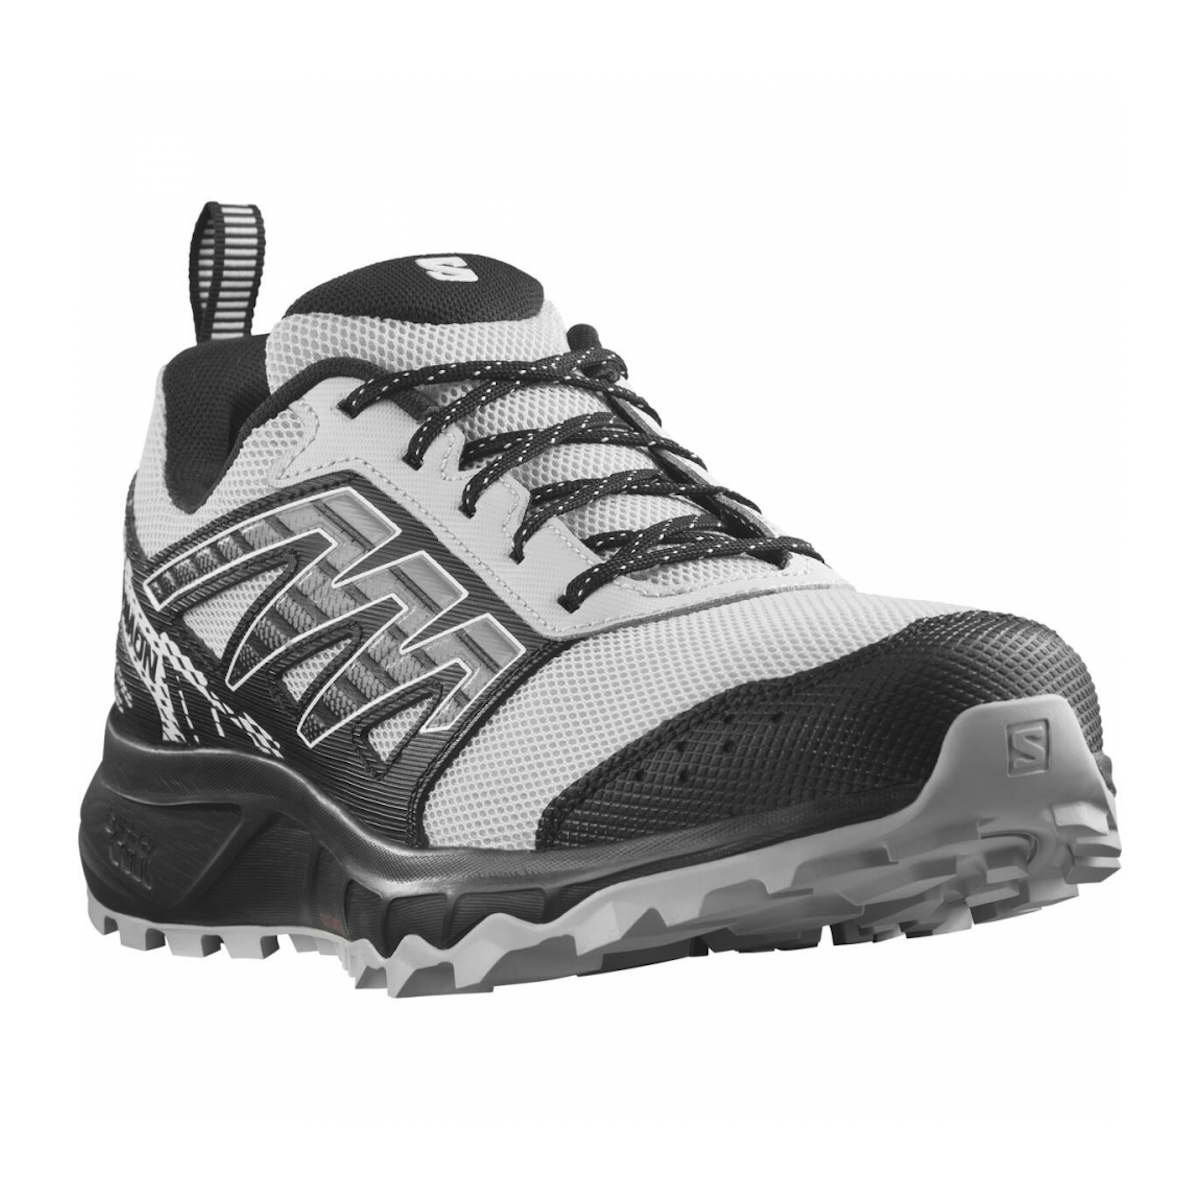 SALOMON WANDER trail running shoes - grey/white/black